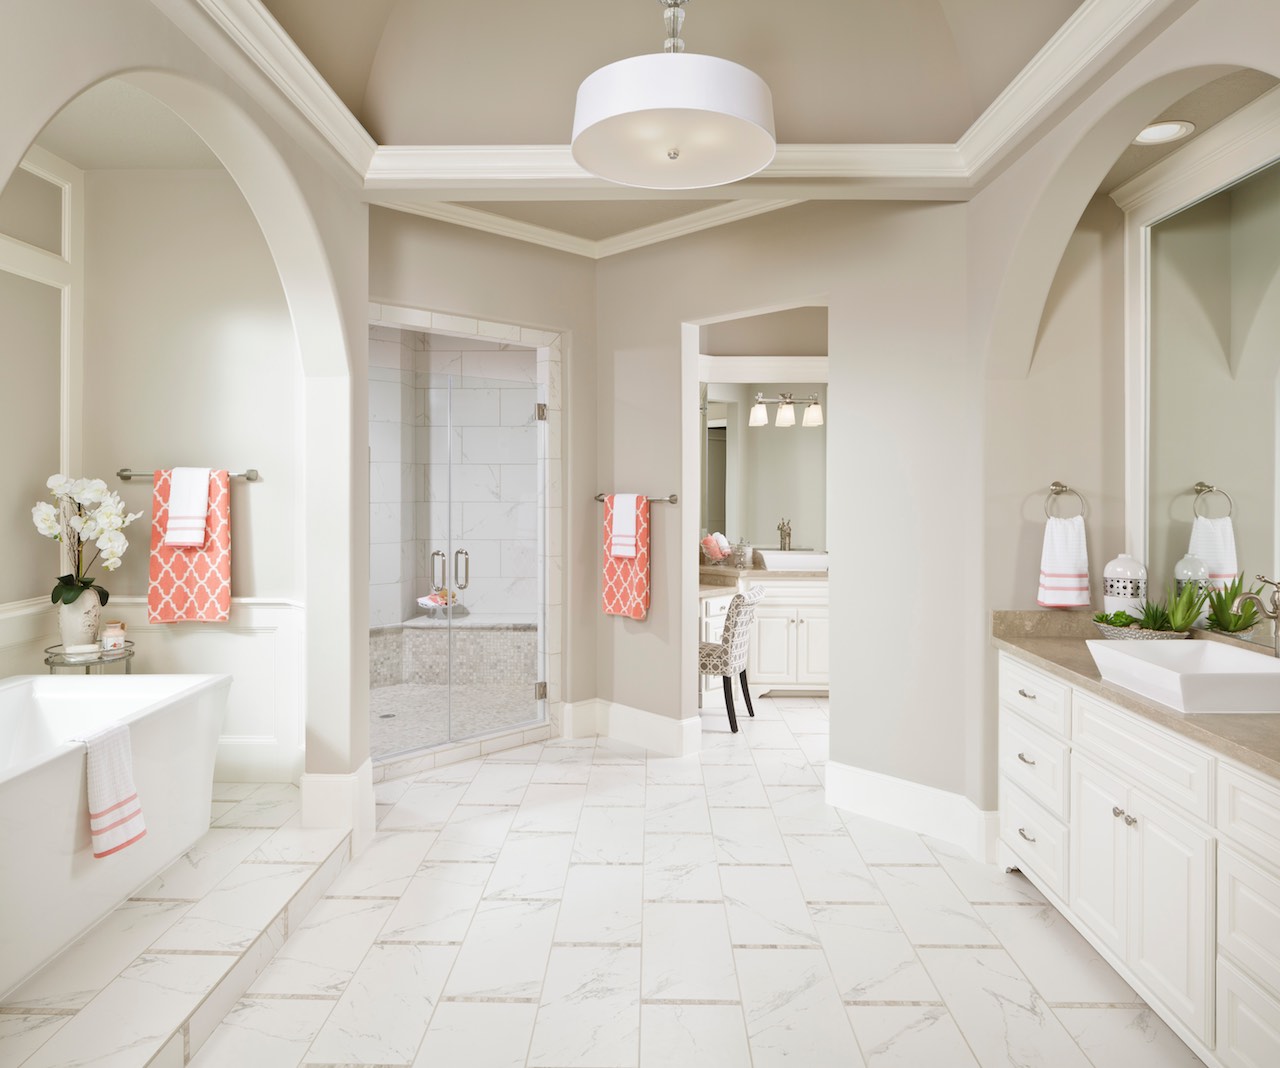 Top Ten Bathroom Design Mistakes To Avoid Morning Star Builders